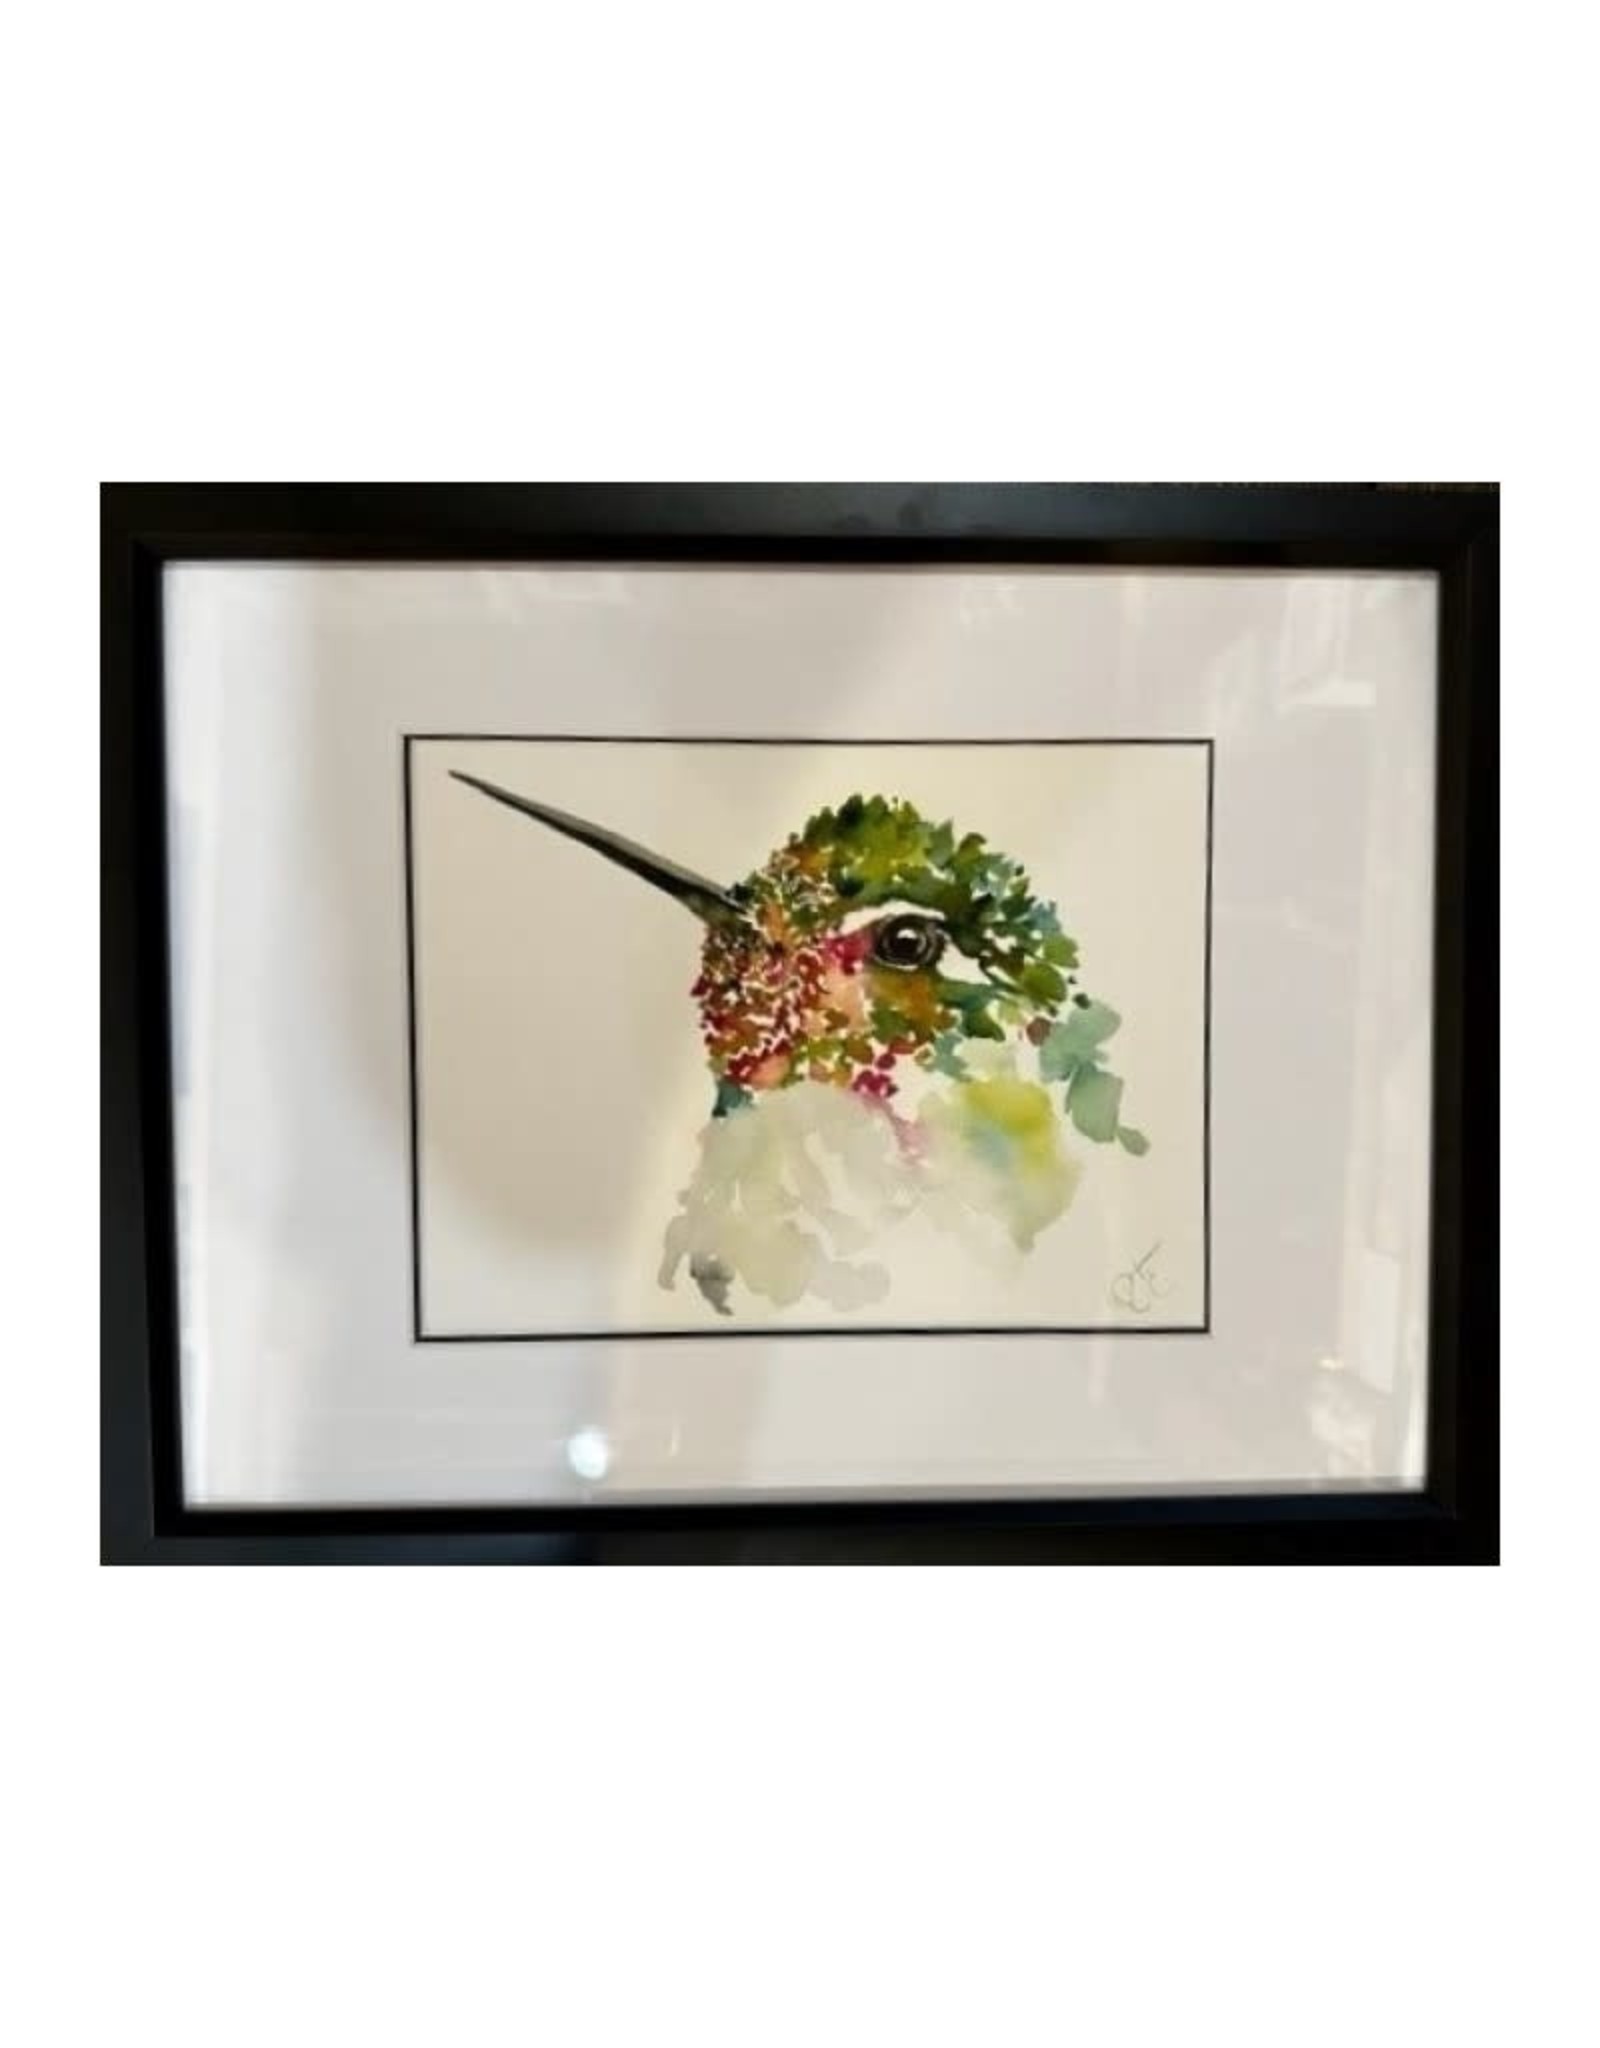 "Hummingbird Portrait" - Michelle Detering Original - Framed Watercolor 16x12